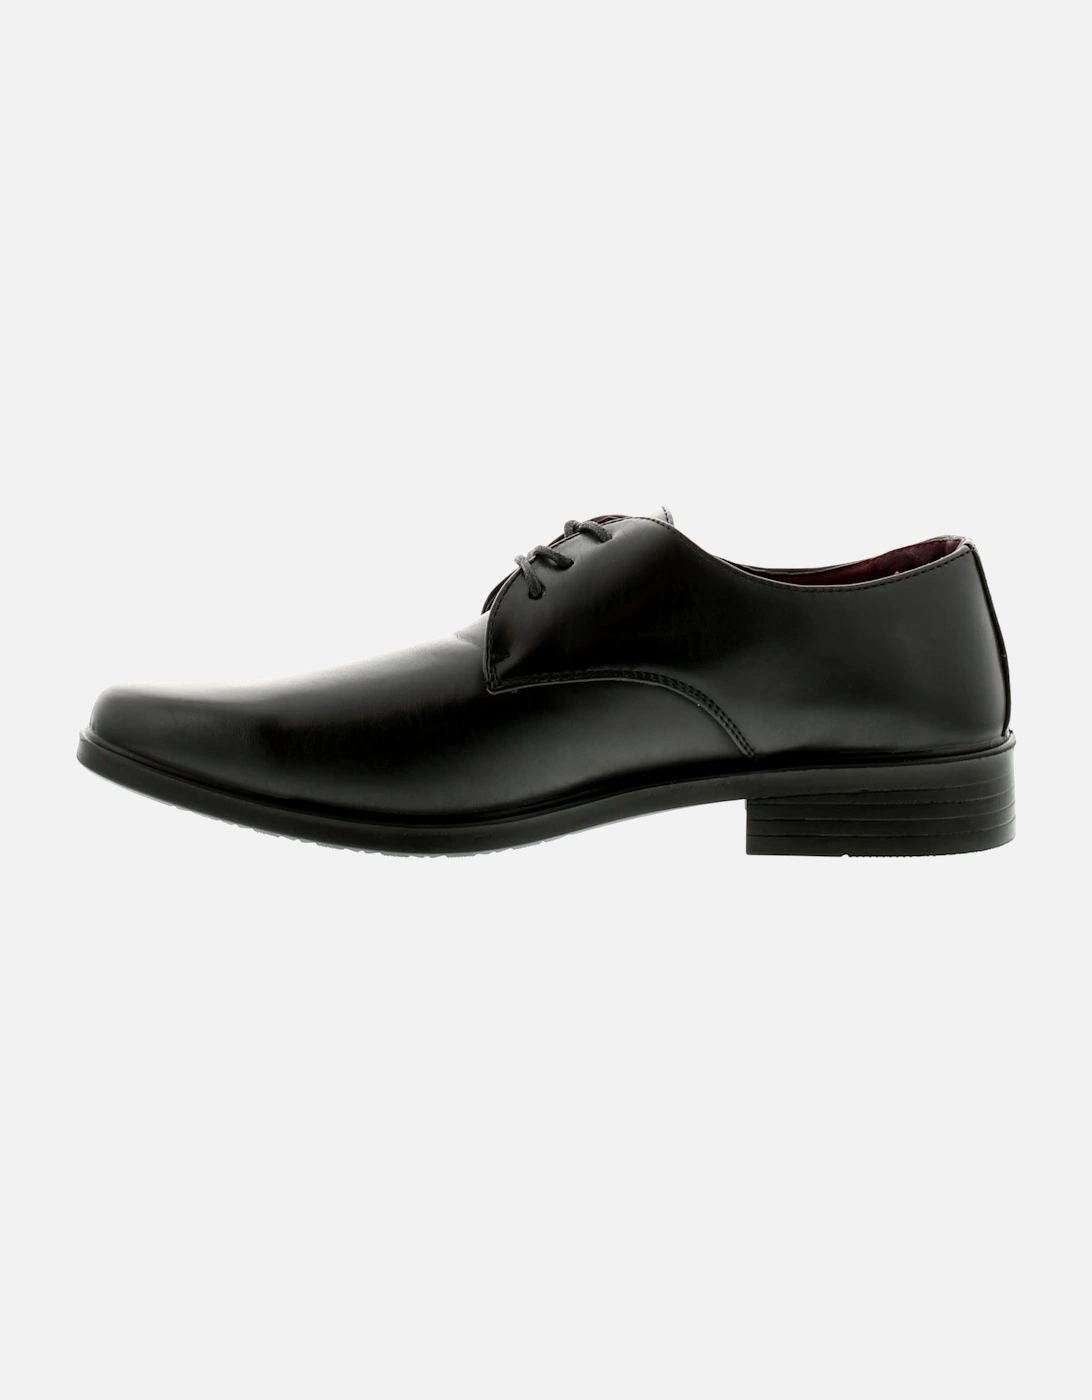 Shoes Mens Smart Formal Drift Lace Up black UK Size